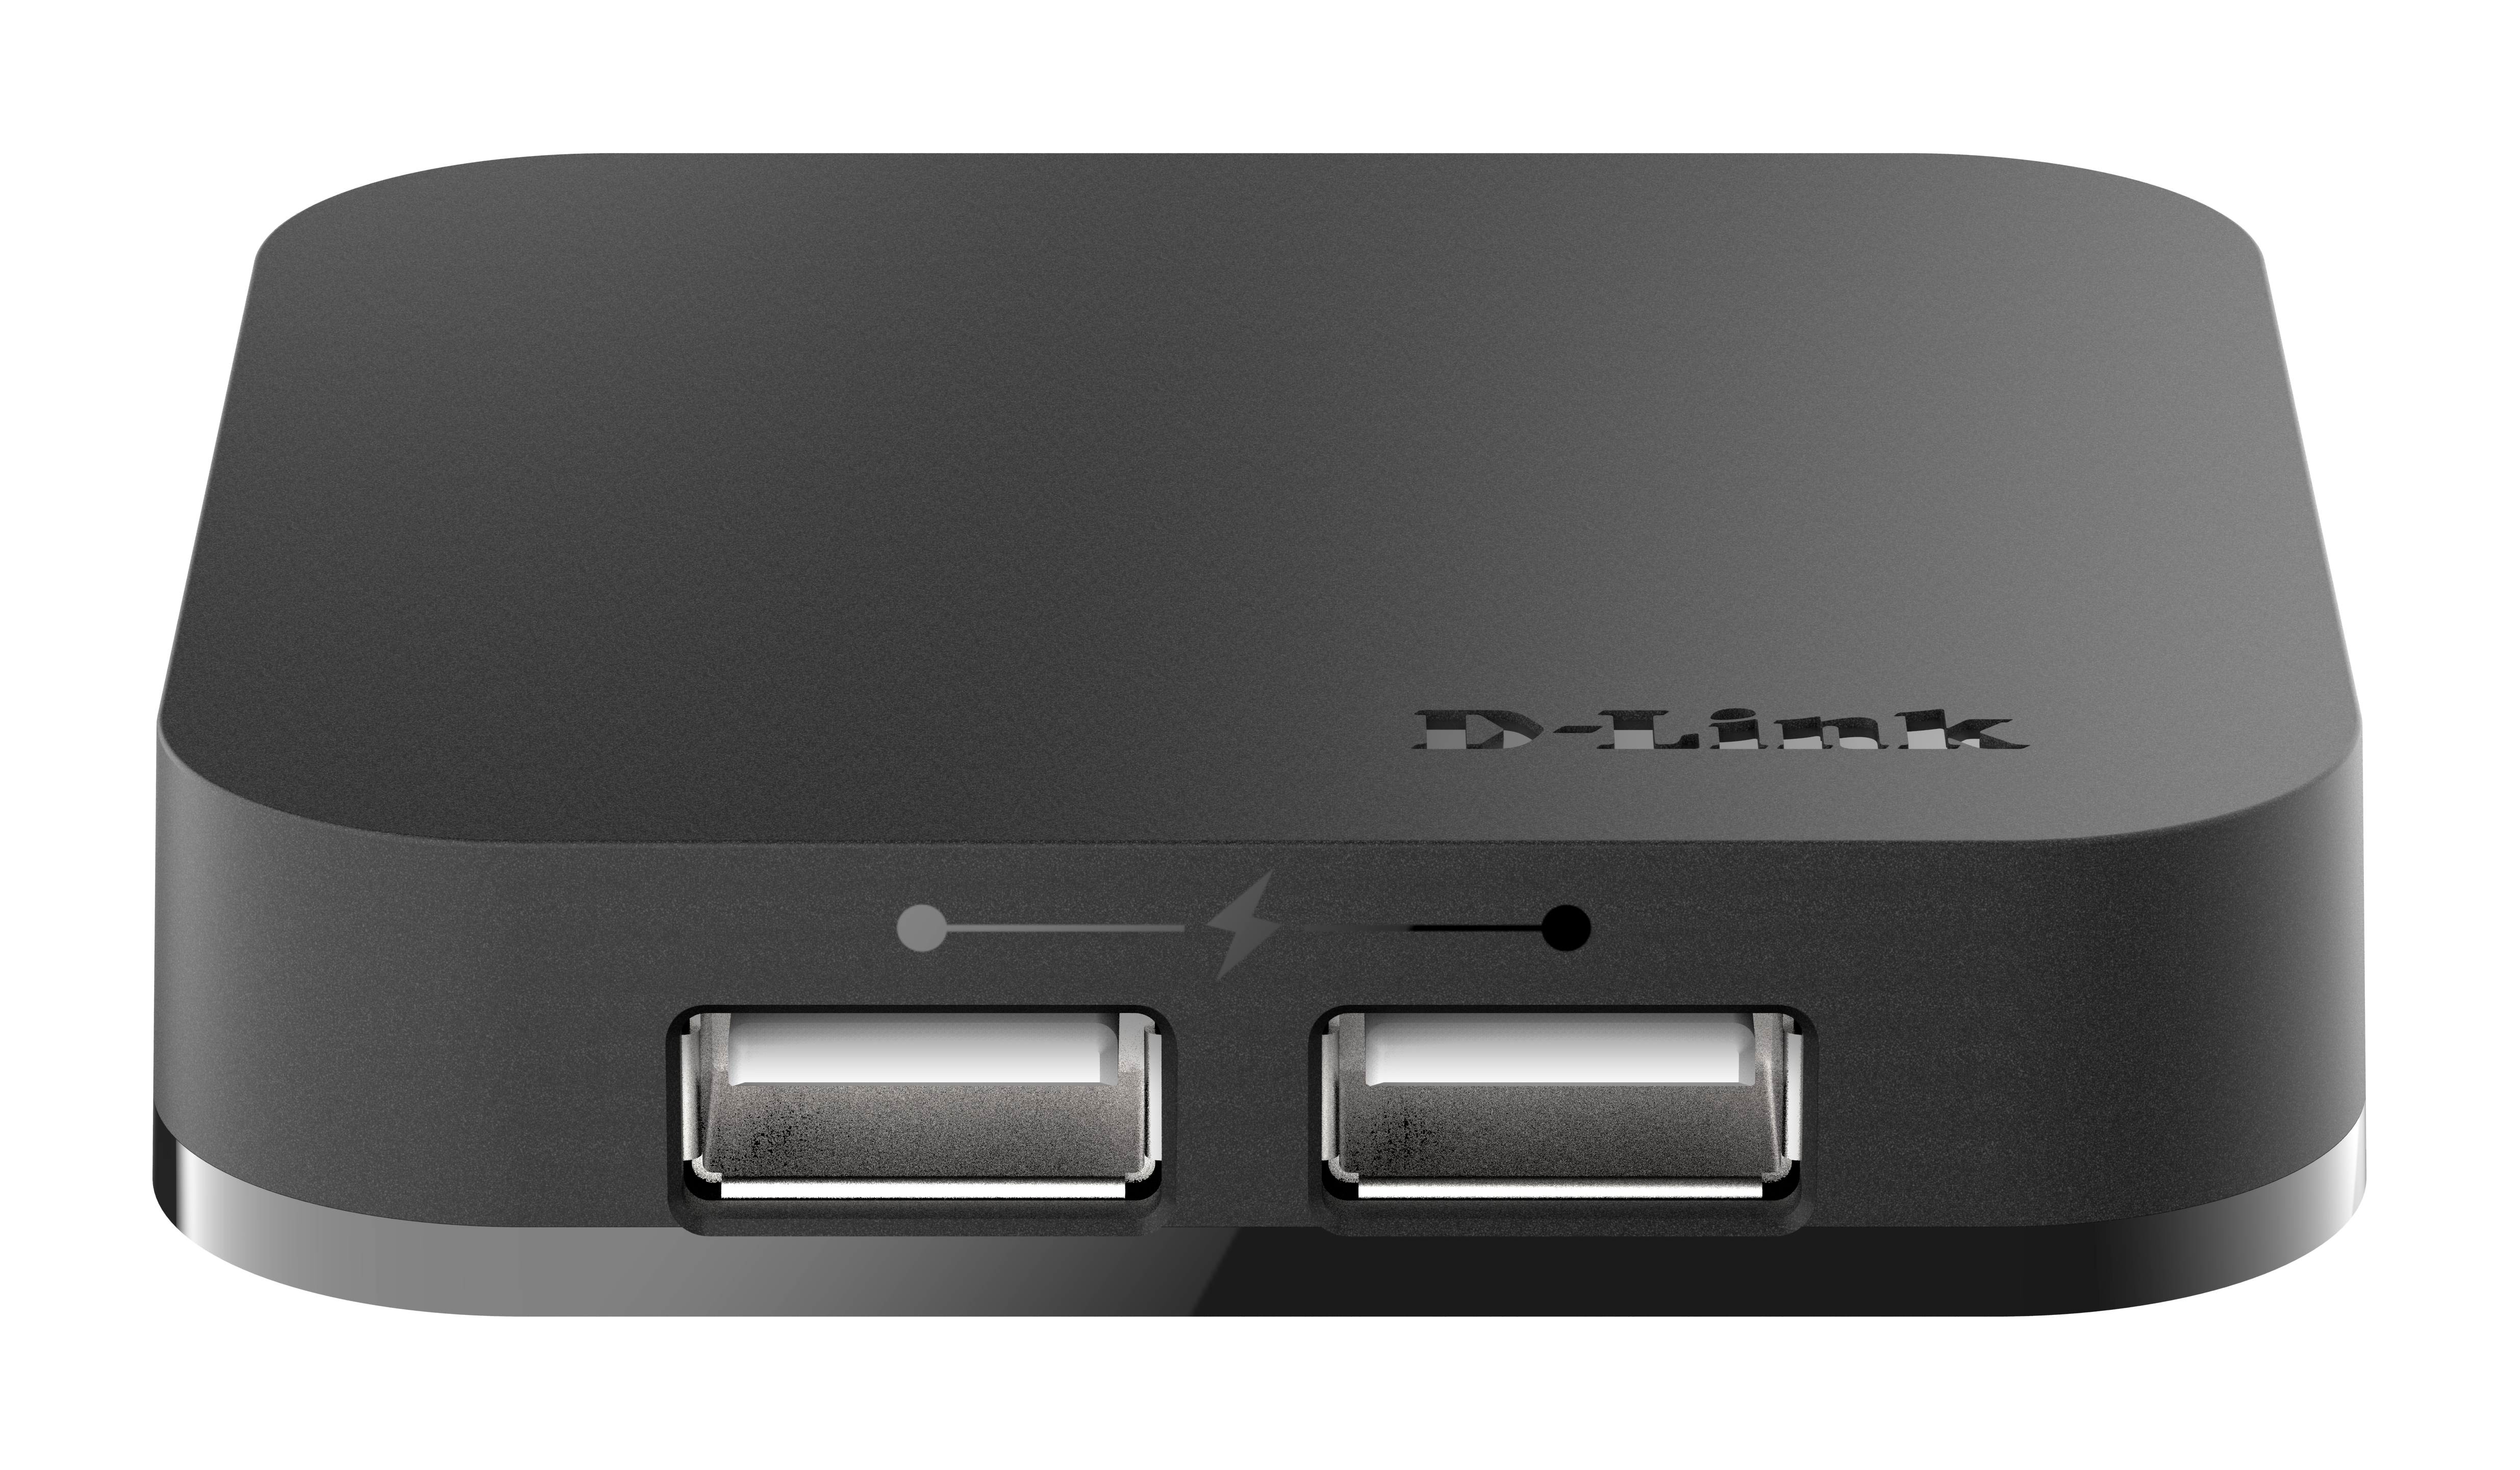 DUB-H4 4-Port USB 2.0 Hub | D-Link